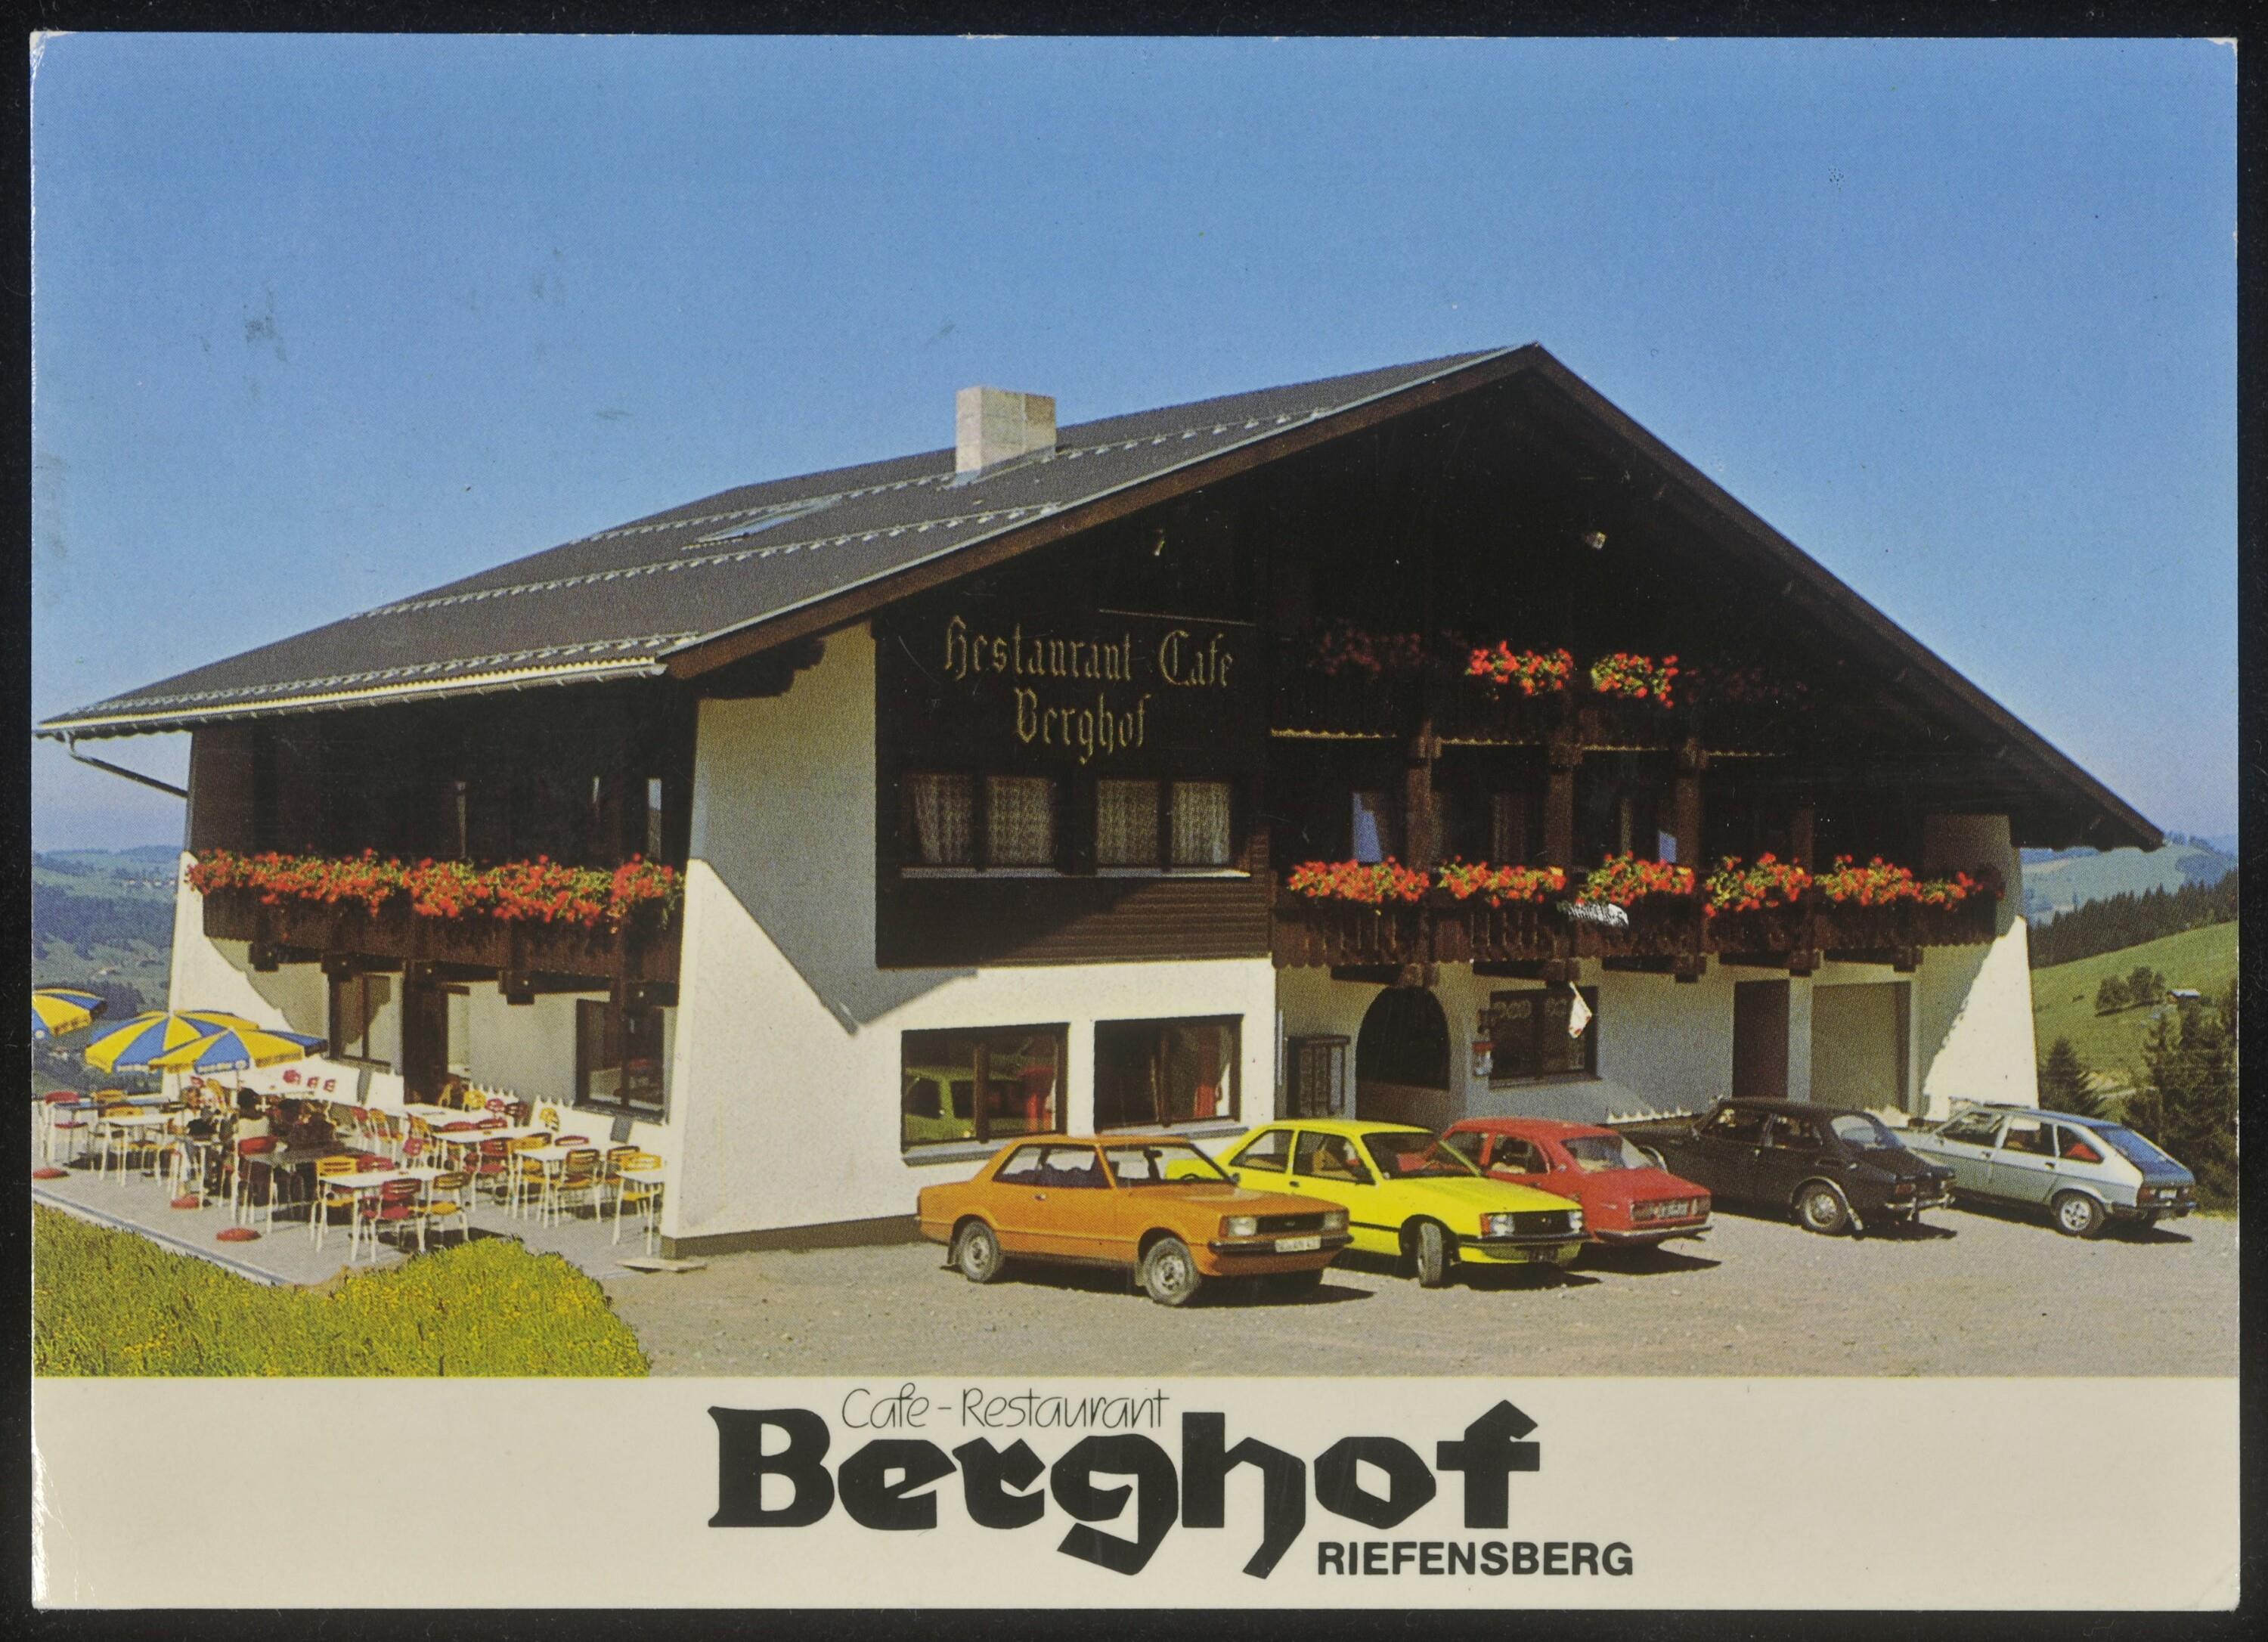 Cafe-Restaurant Berghof Riefensberg></div>


    <hr>
    <div class=